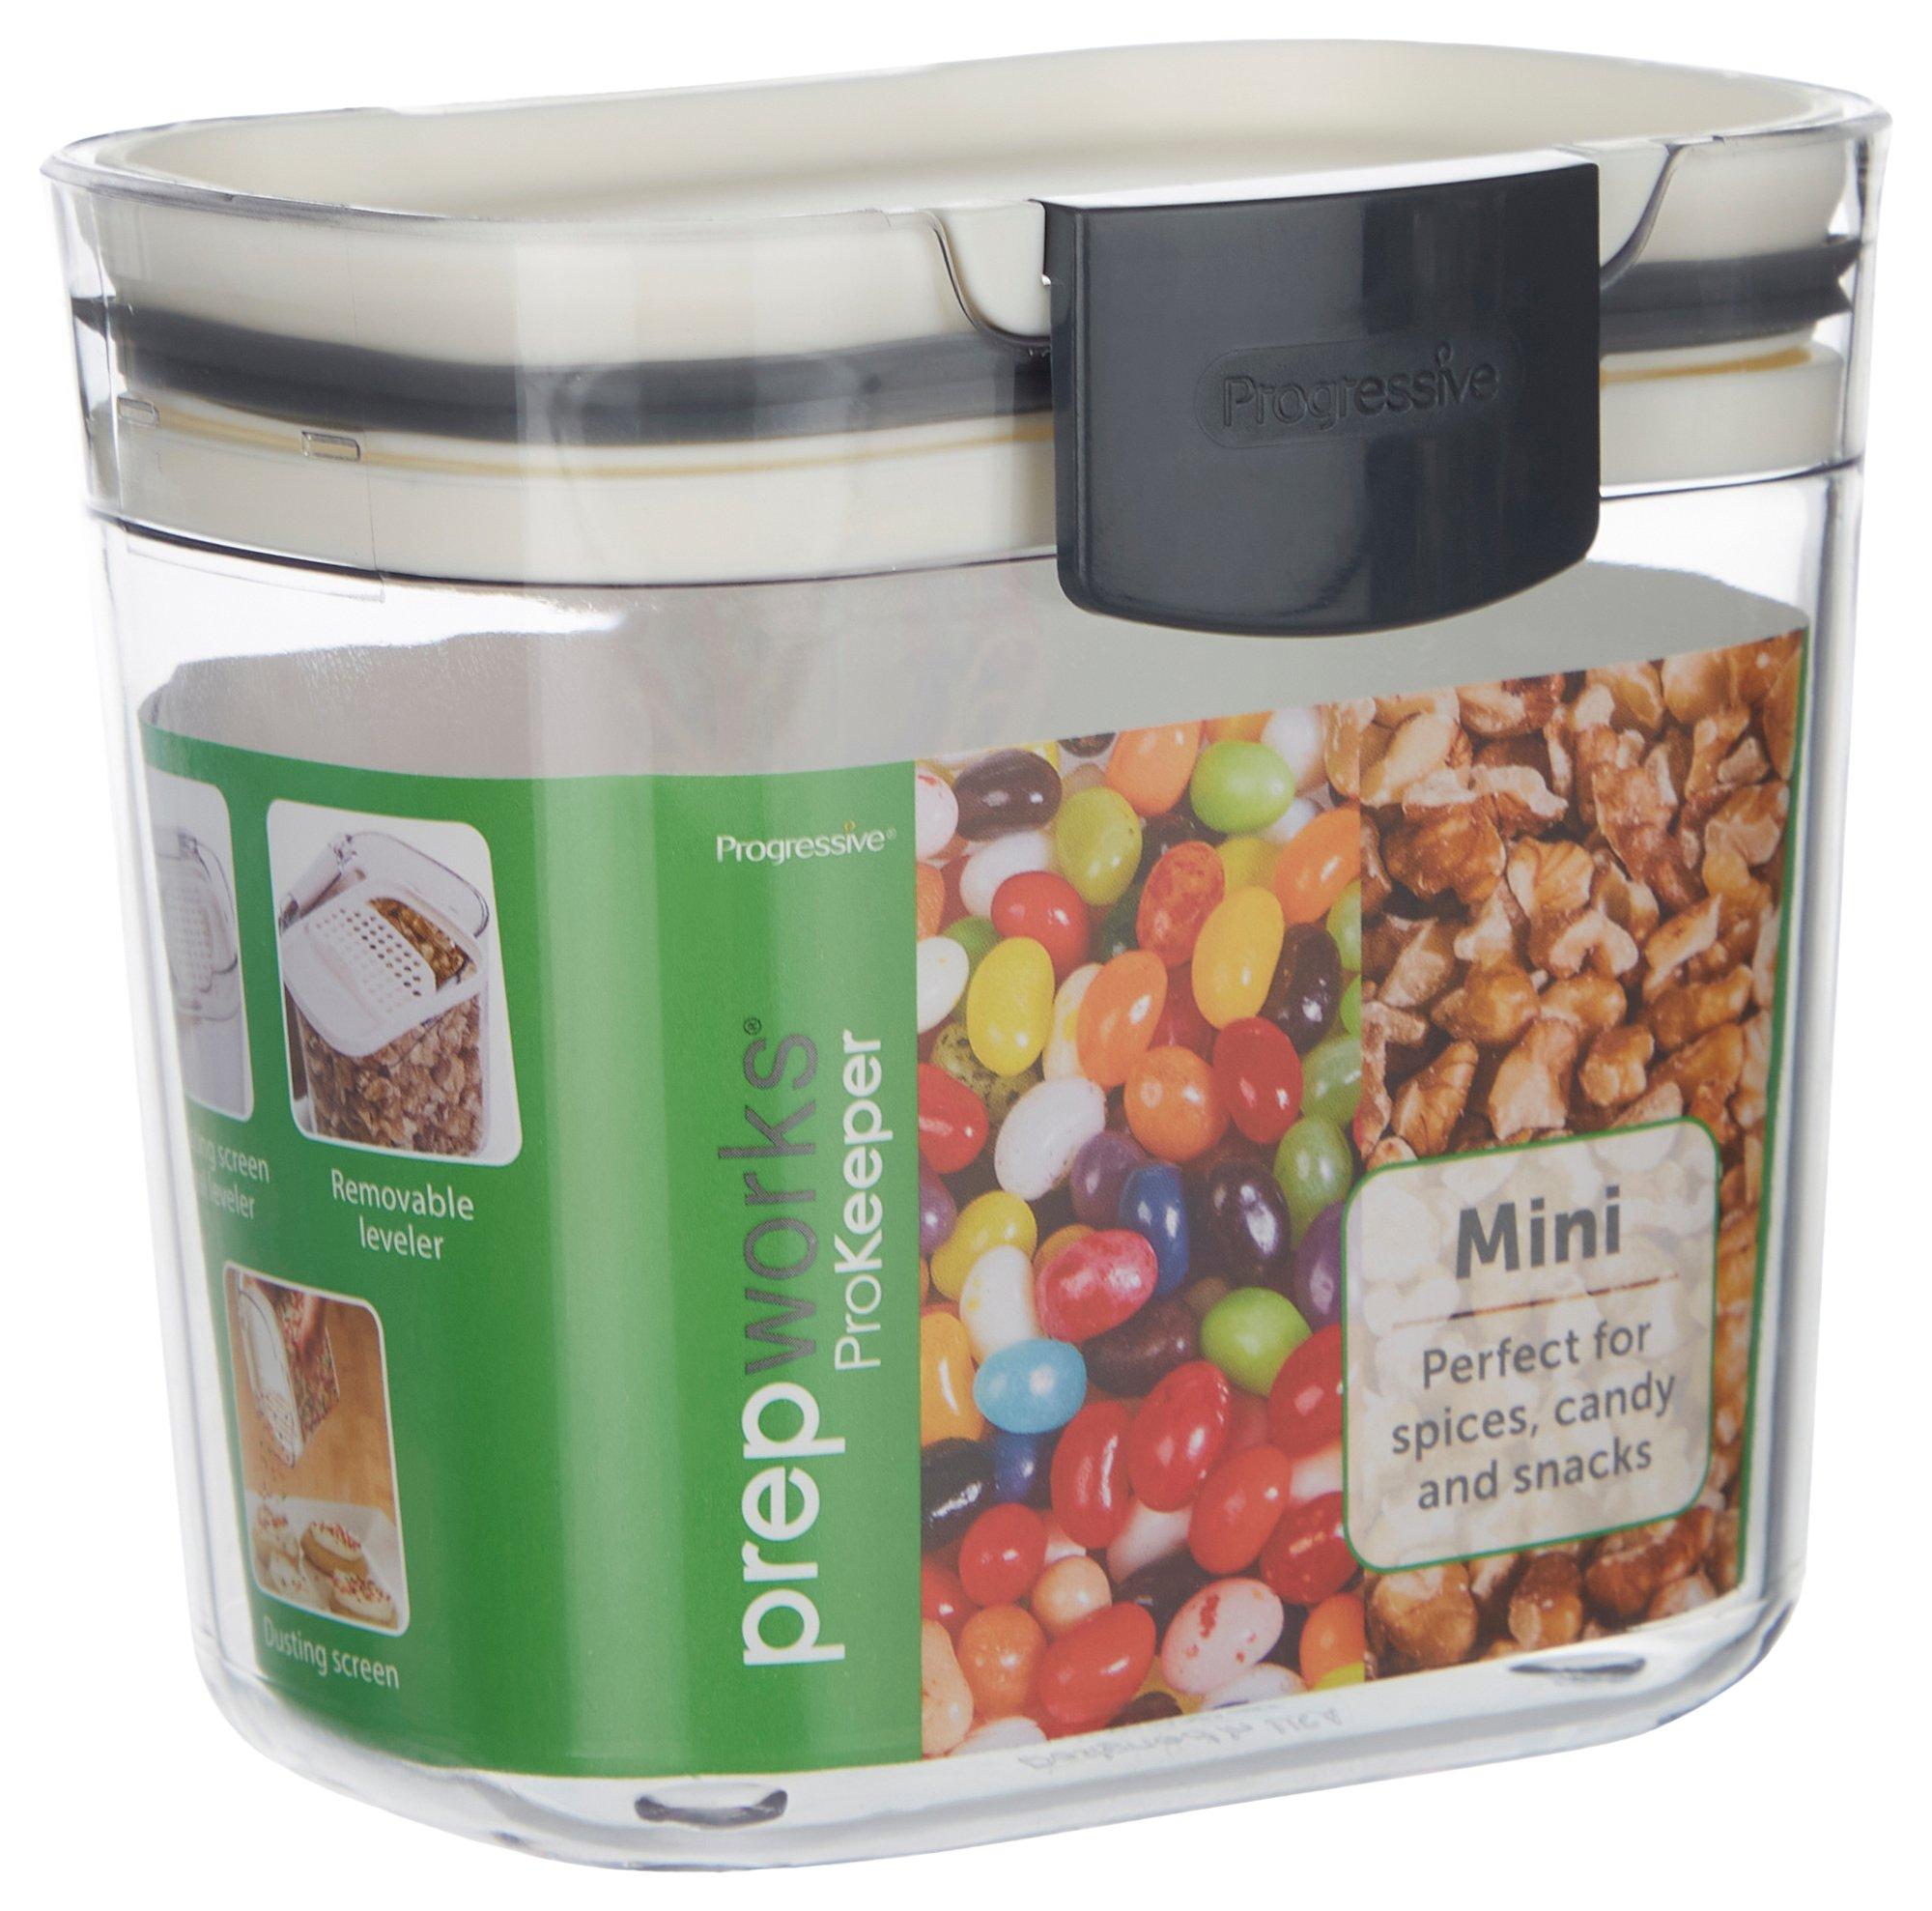 ProKeeper Plus Small Cereal Container, Progressive